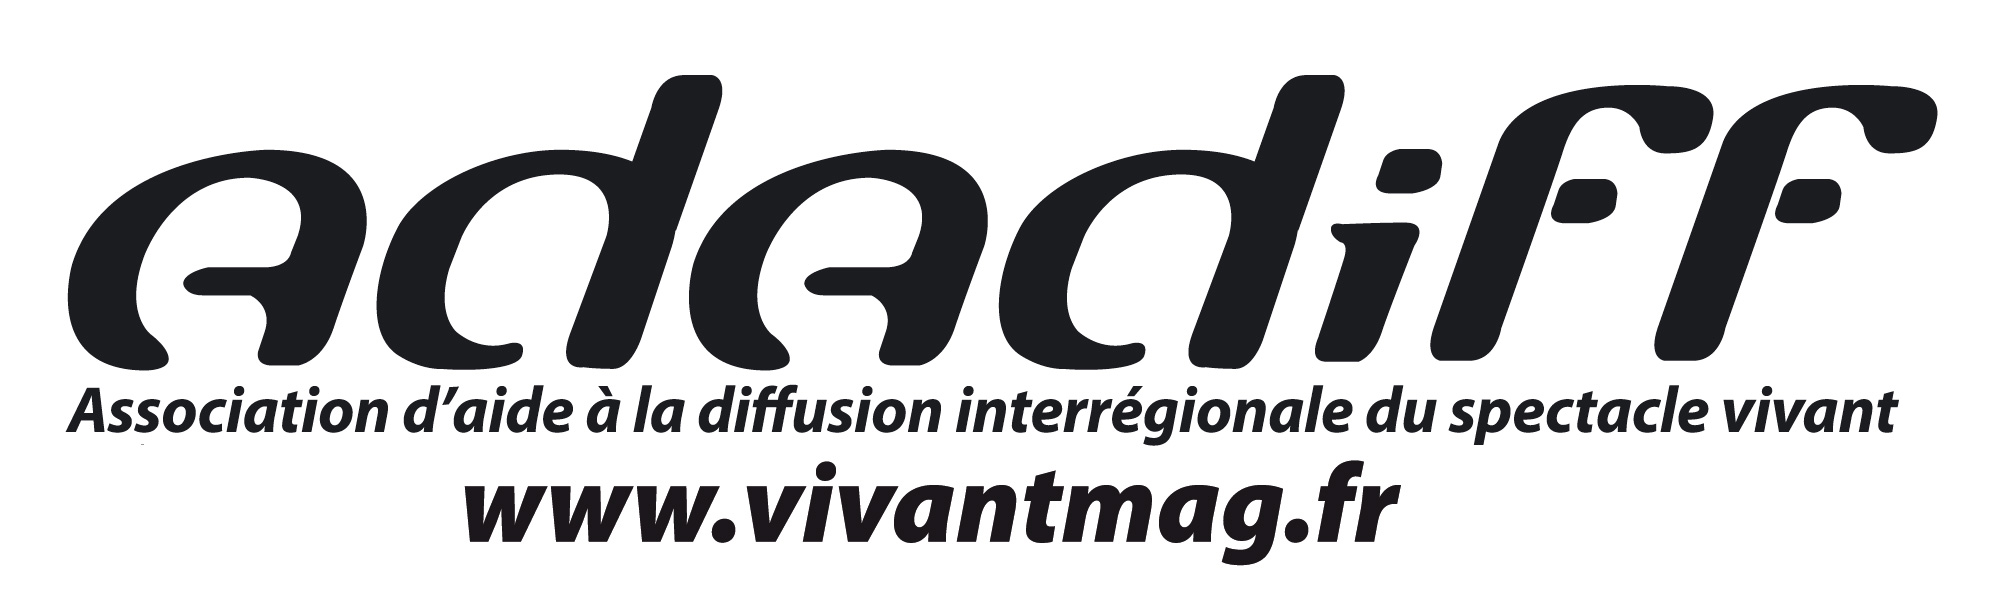 logo_AdAdiff_vivantmag_Partenaire